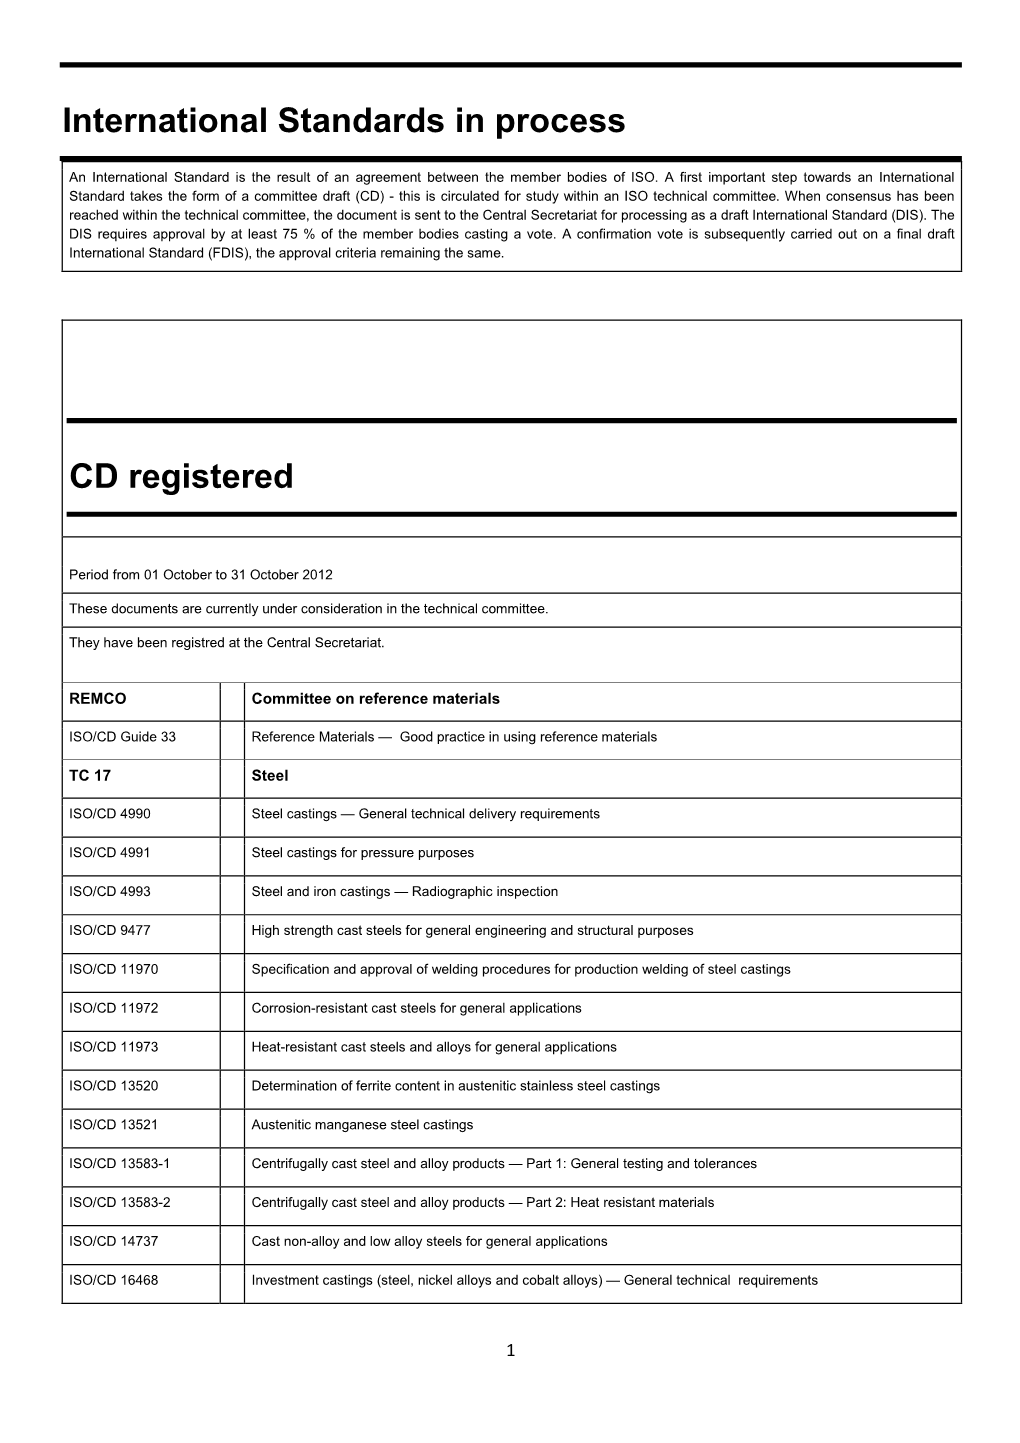 International Standards in Process CD Registered